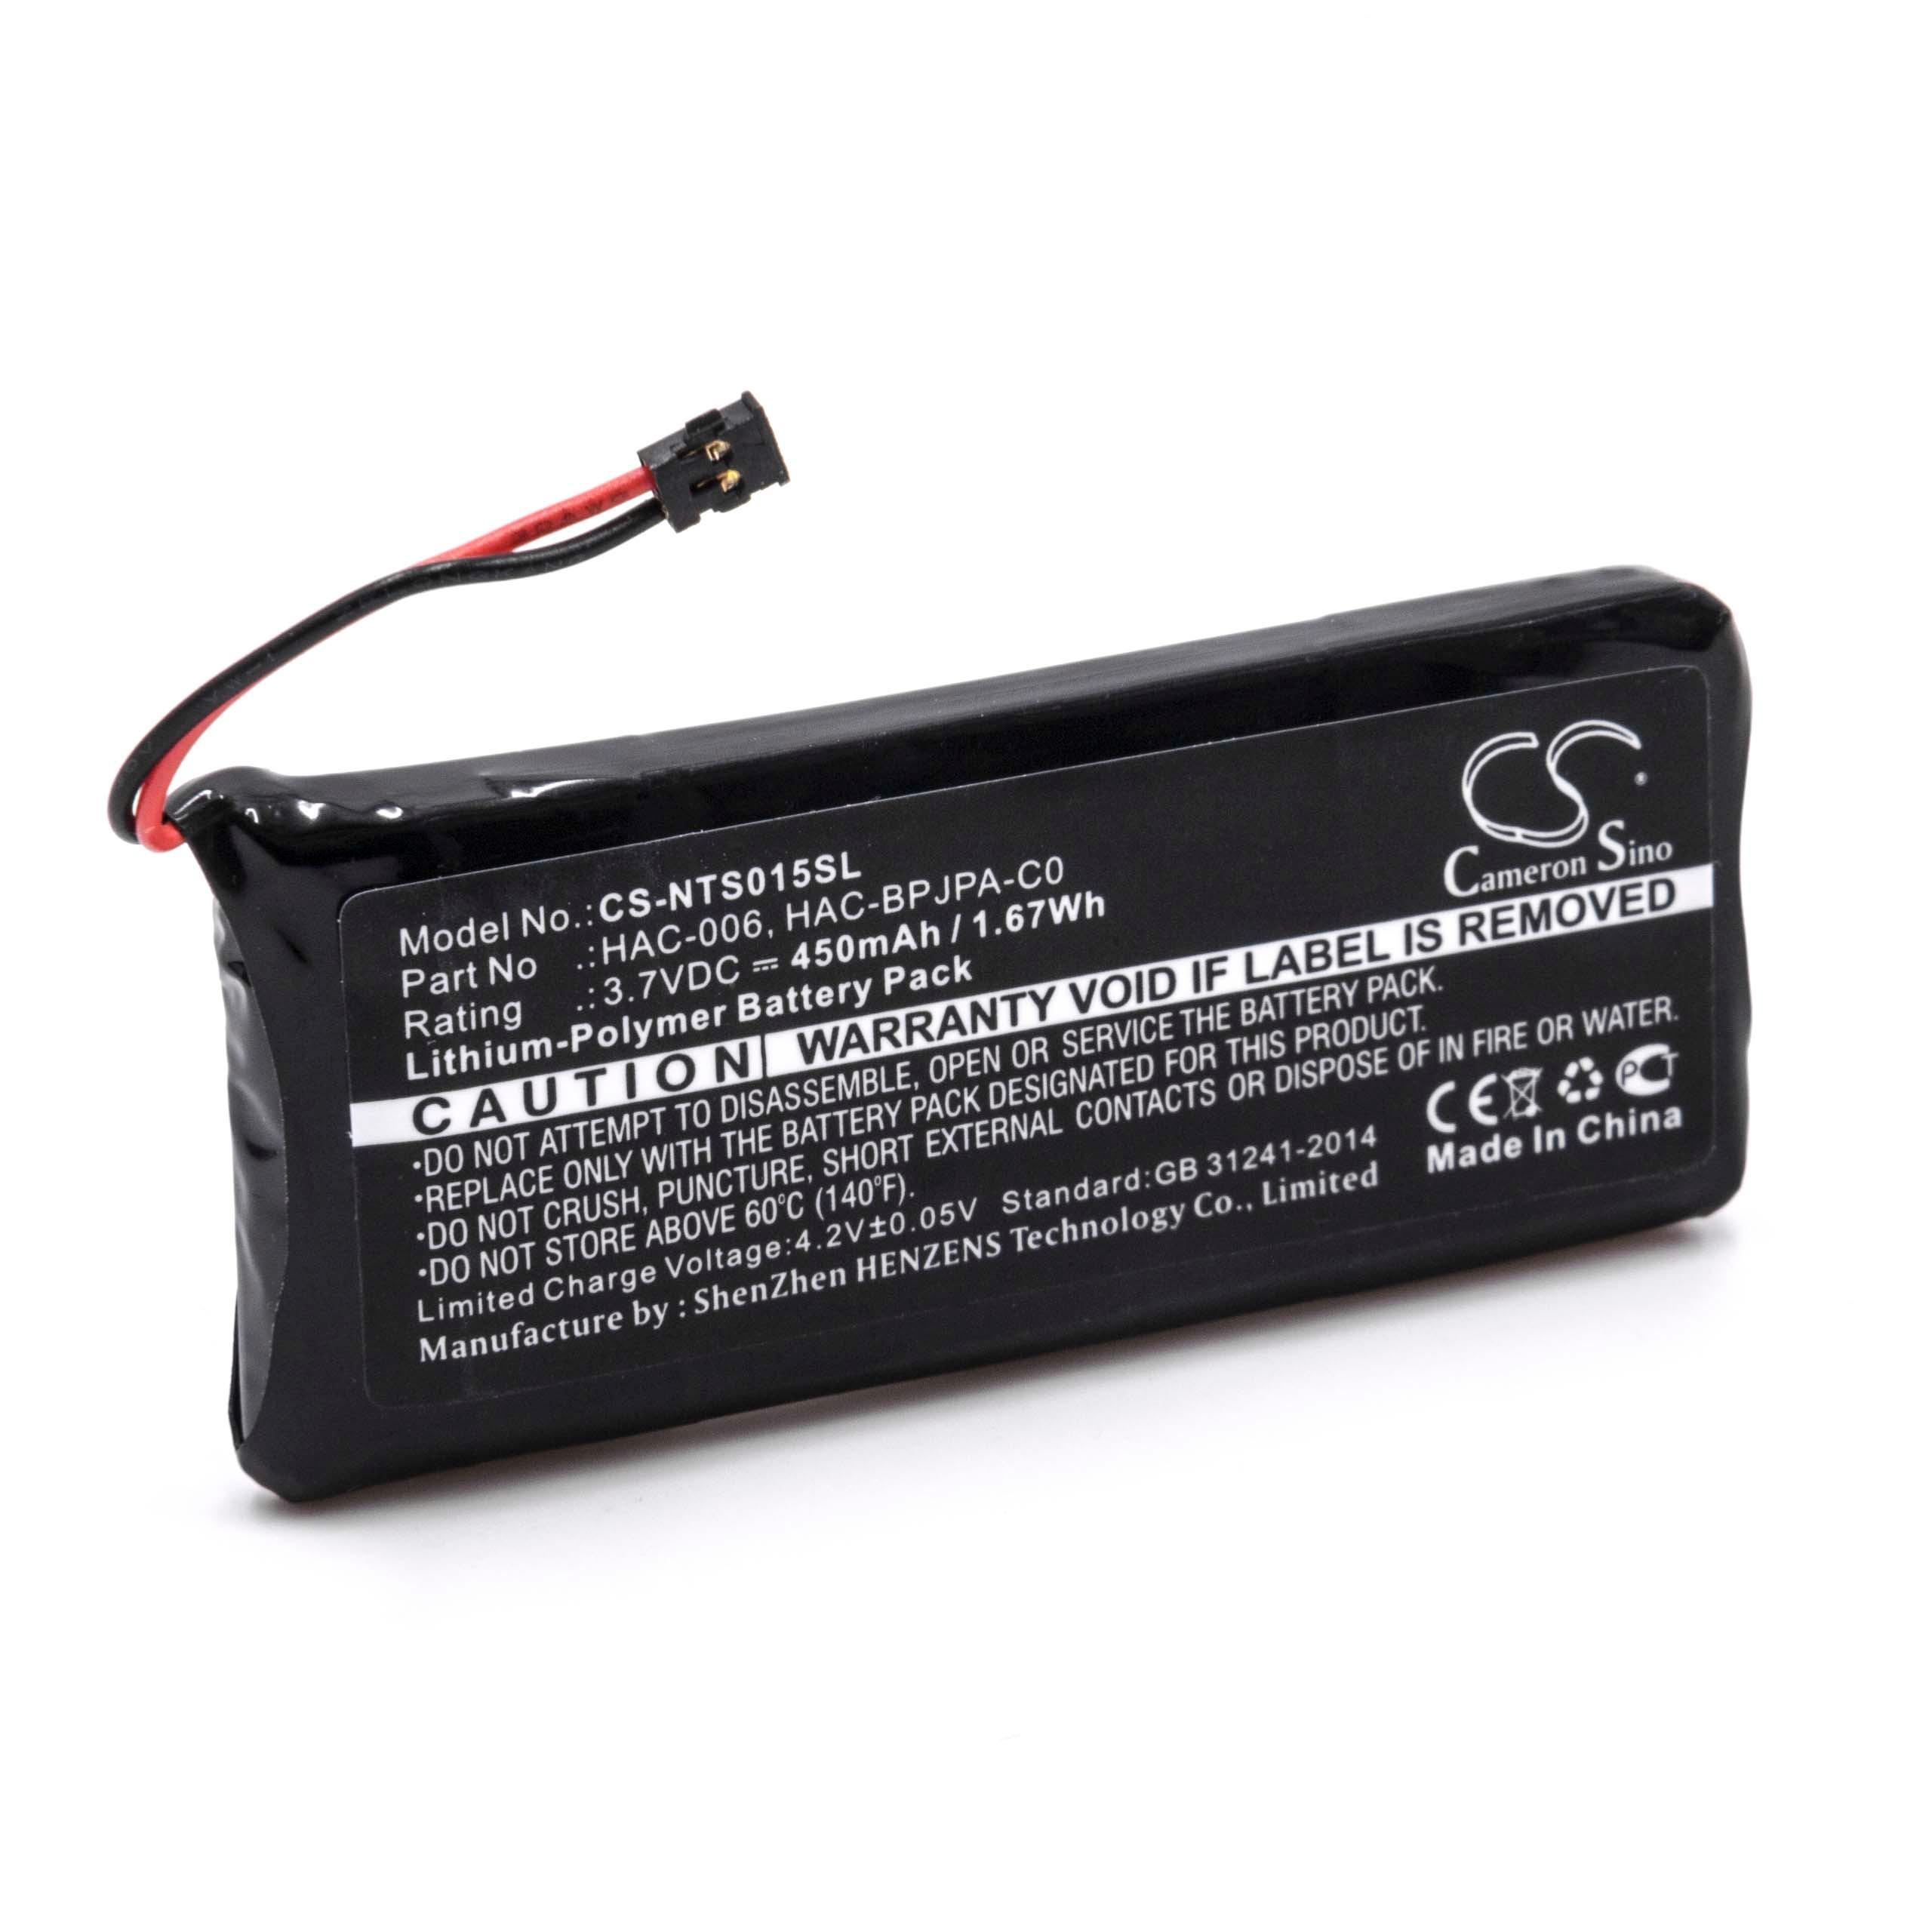 Batería reemplaza Nintendo HAC-BPJPA-C0, HAC-006 para consola Nintendo - 450 mAh 3,7 V Li-poli